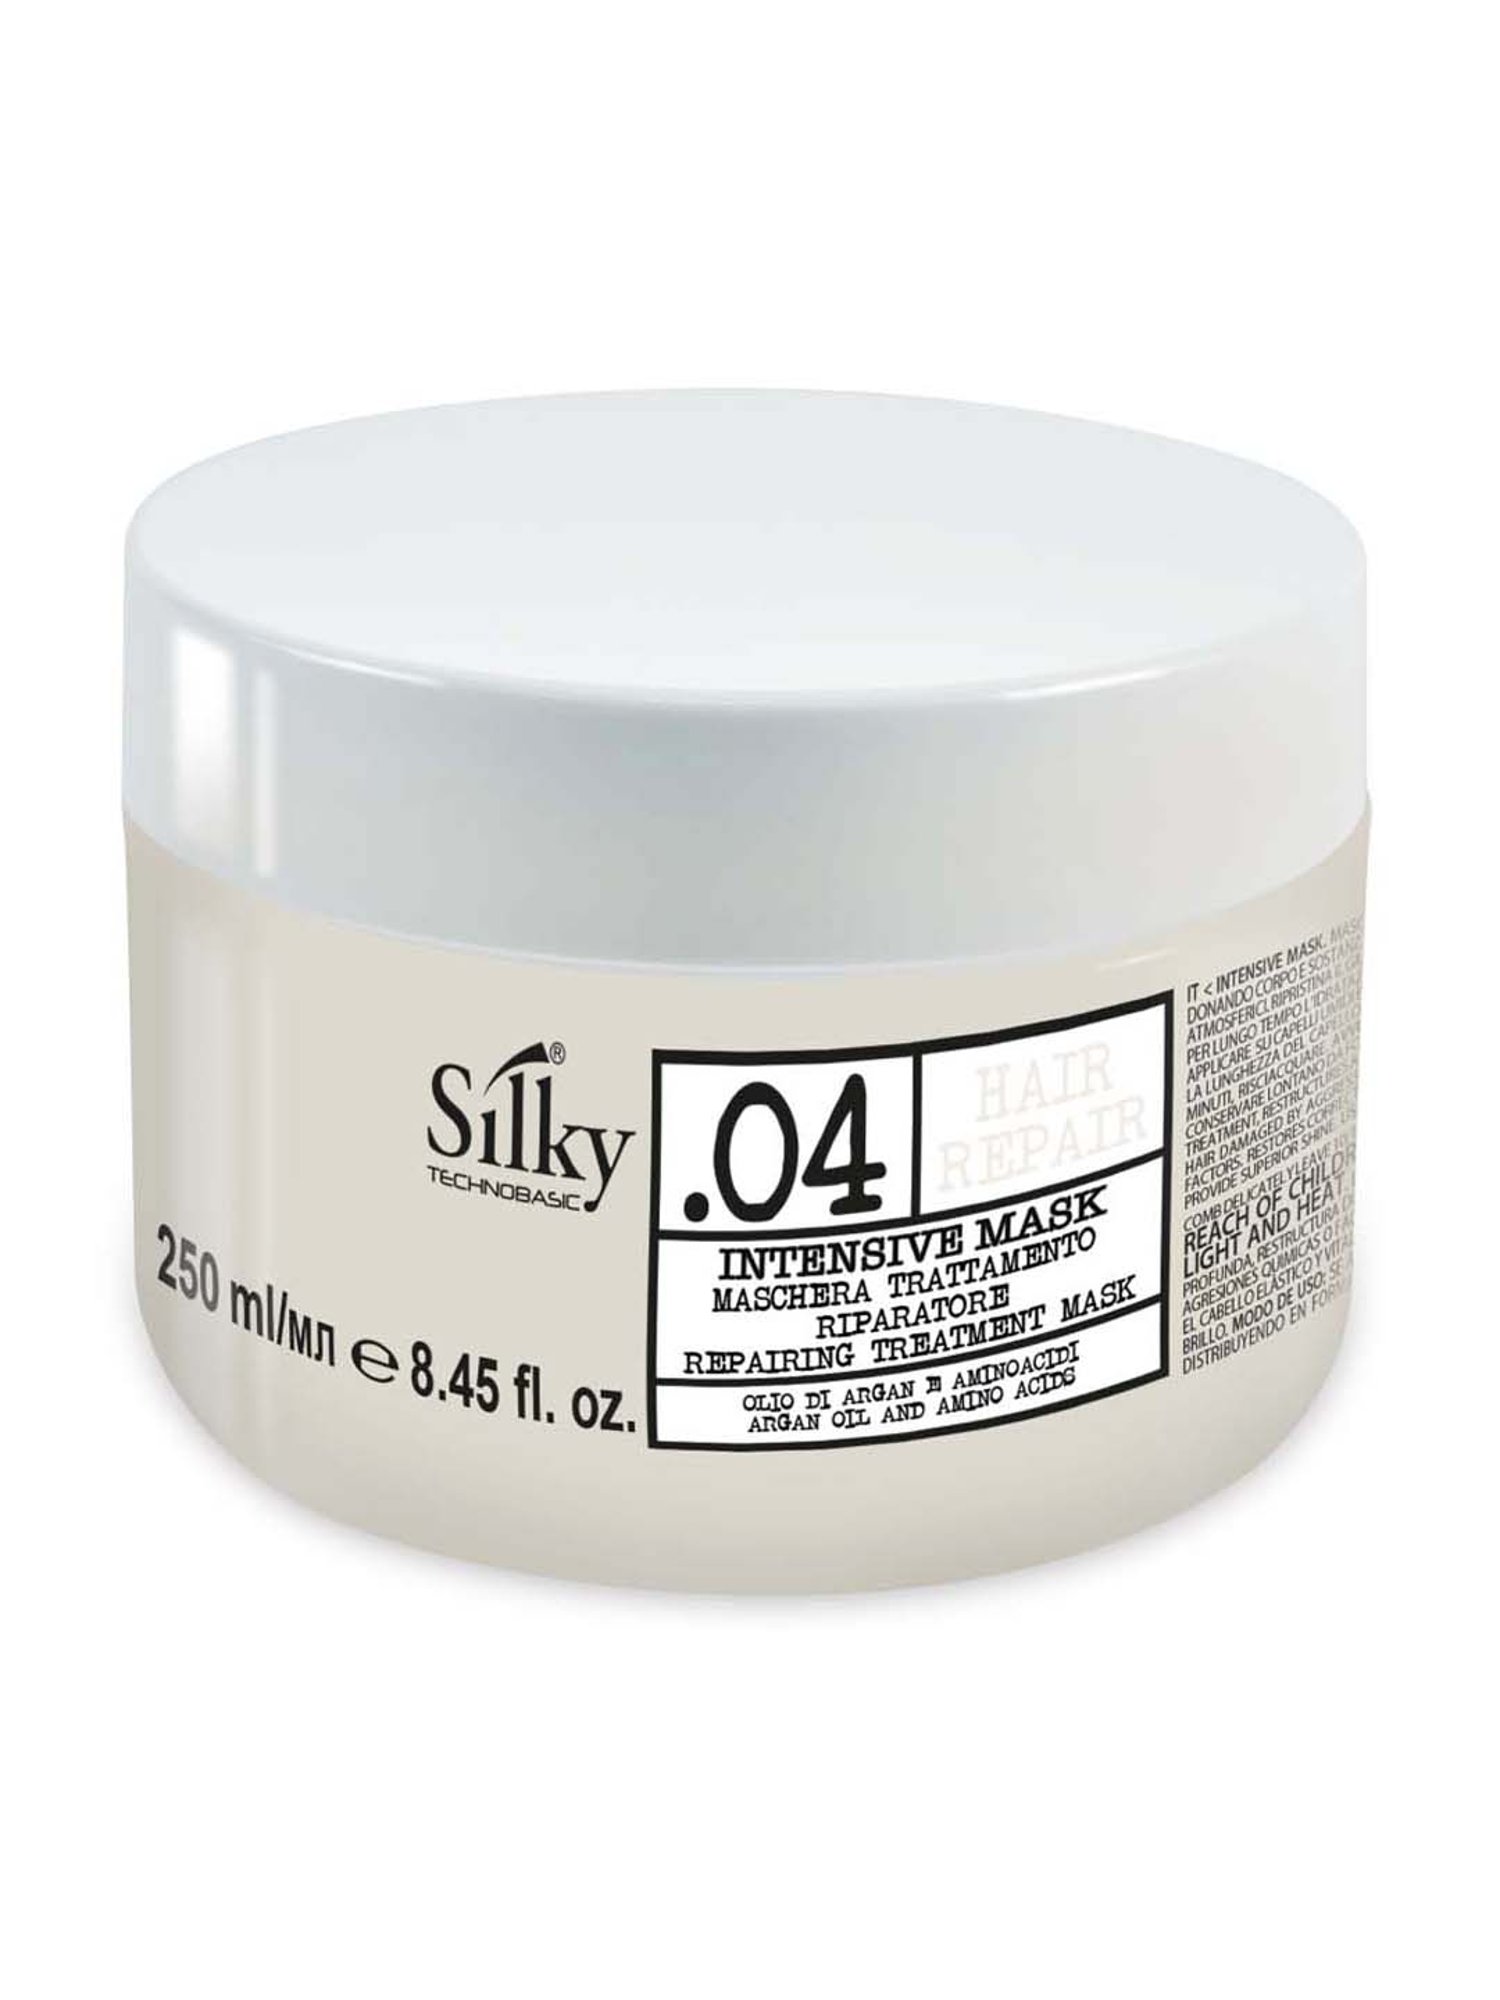 Shampoo for Radiant Soft  Silky Hair 35957 shampoo  Hair  Oriflame  cosmetics